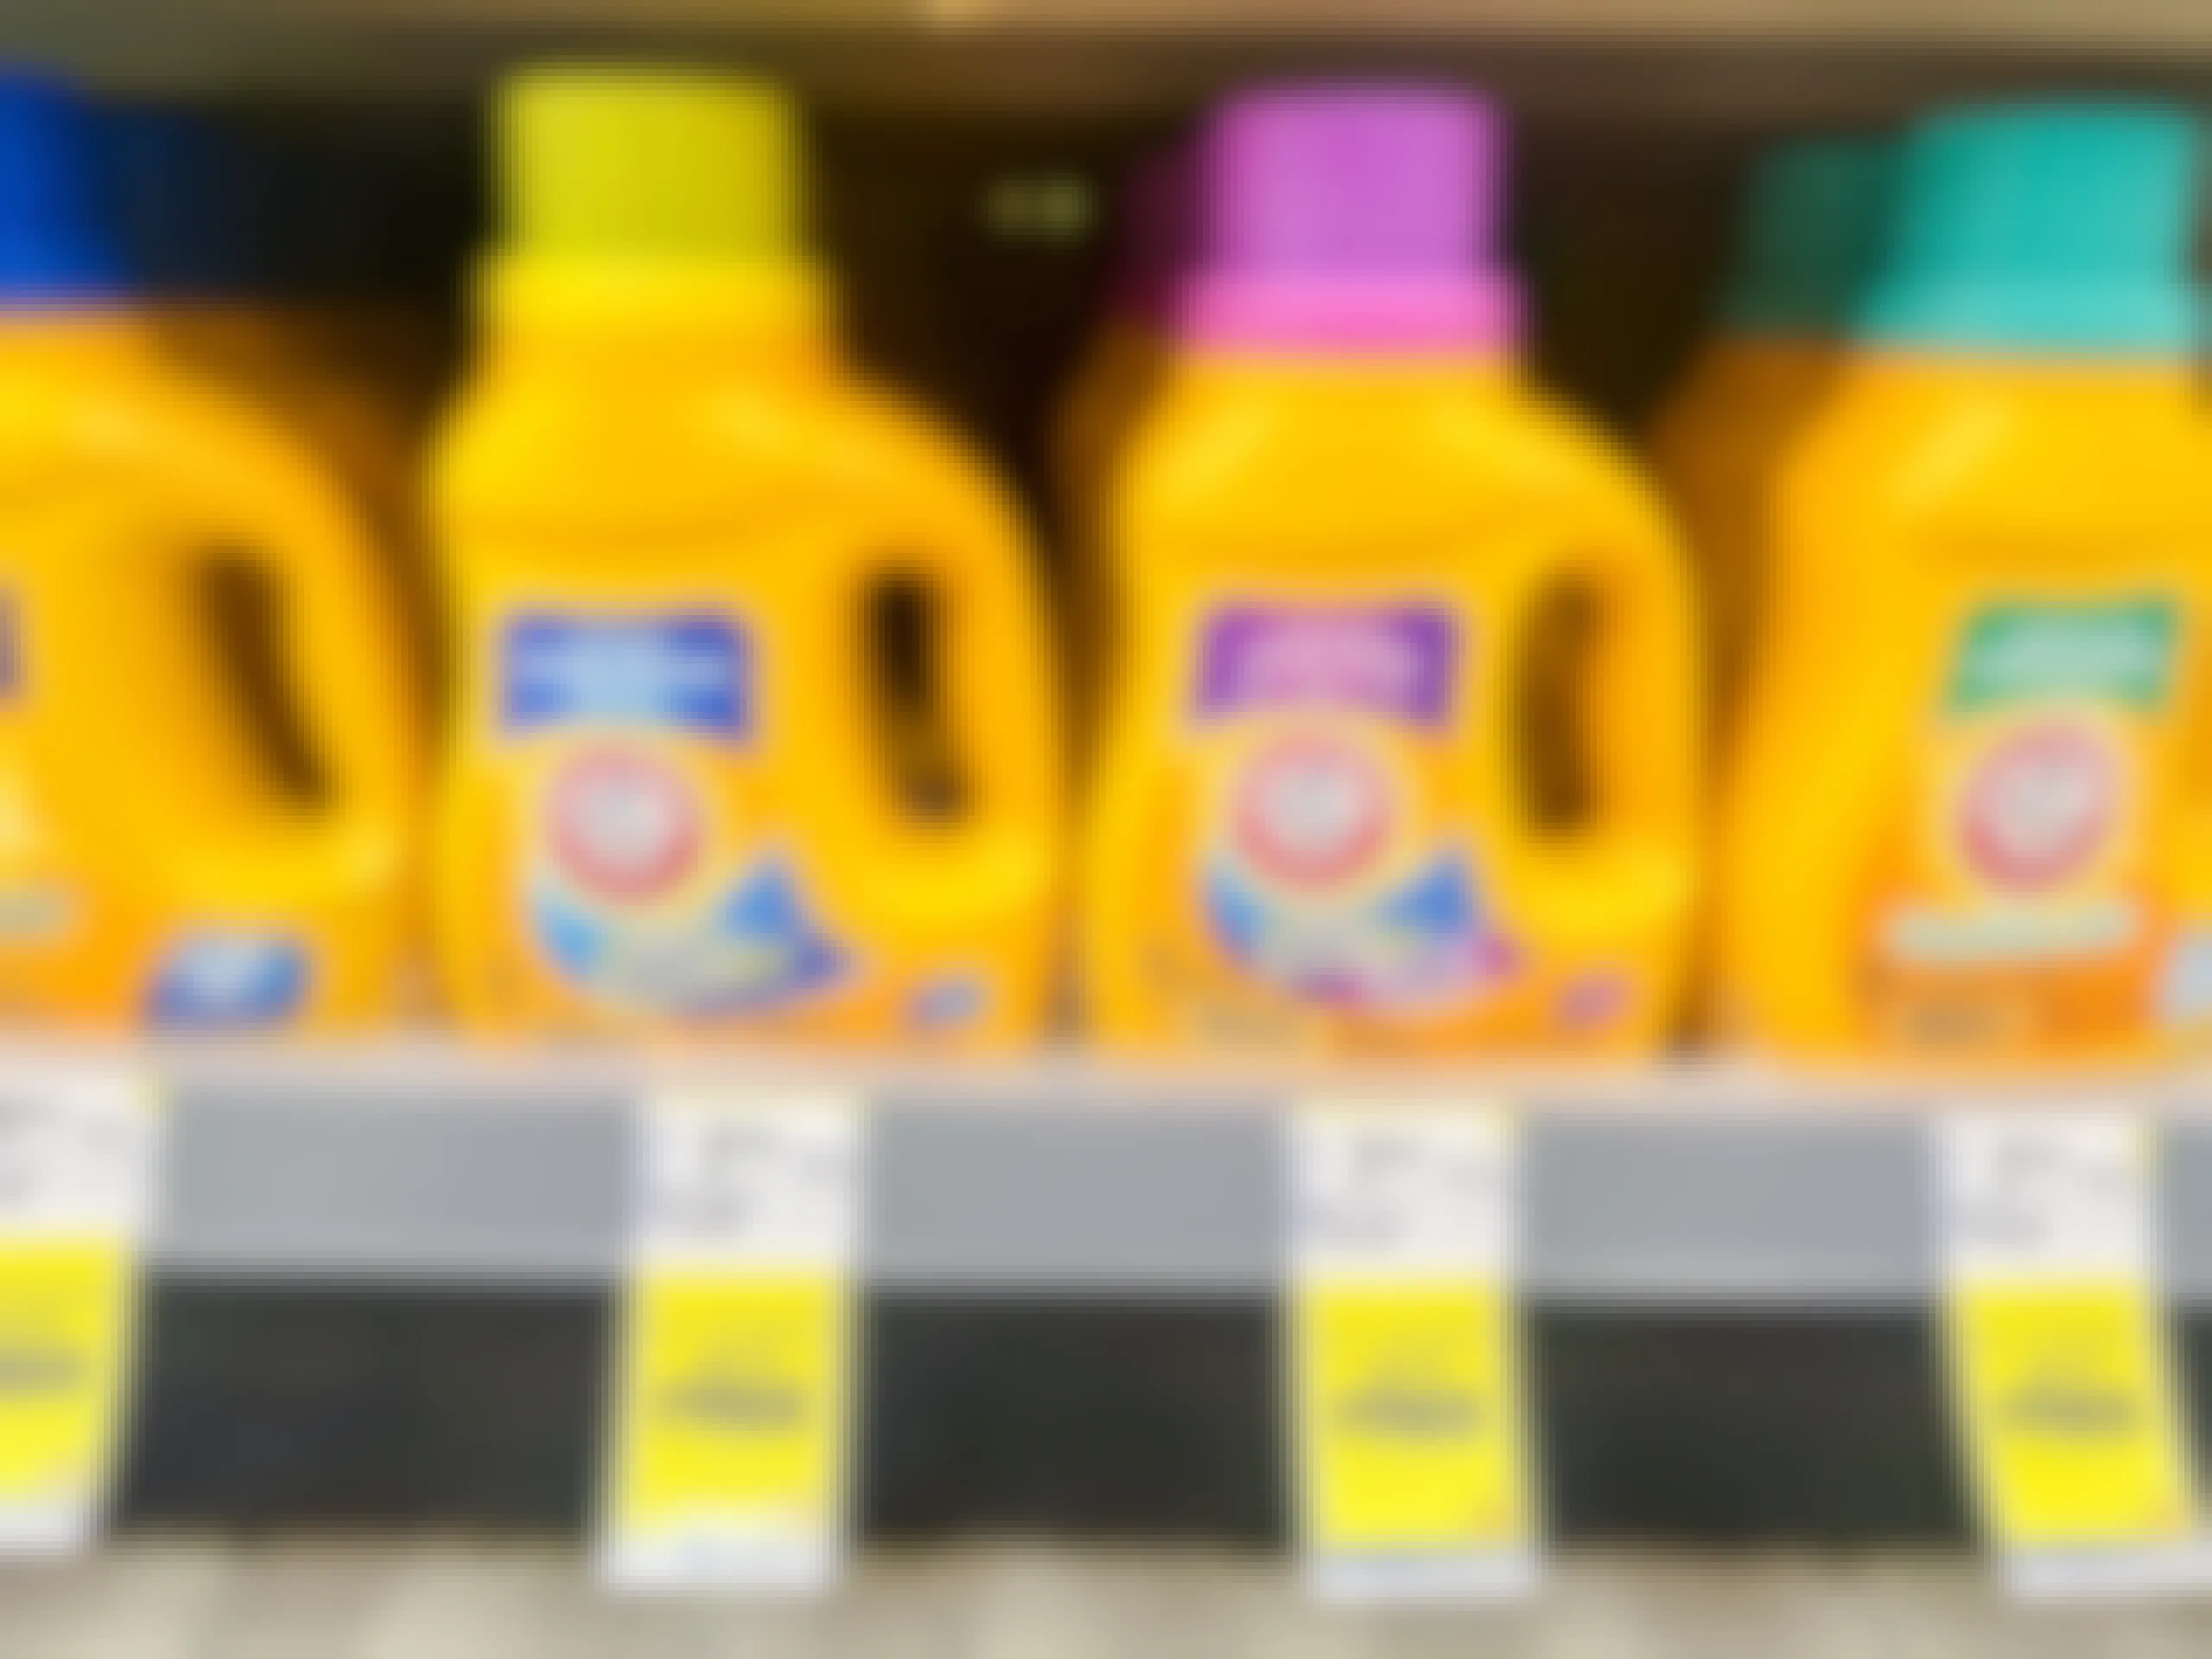 bottles of arm and hammer laundry detergent on shelf